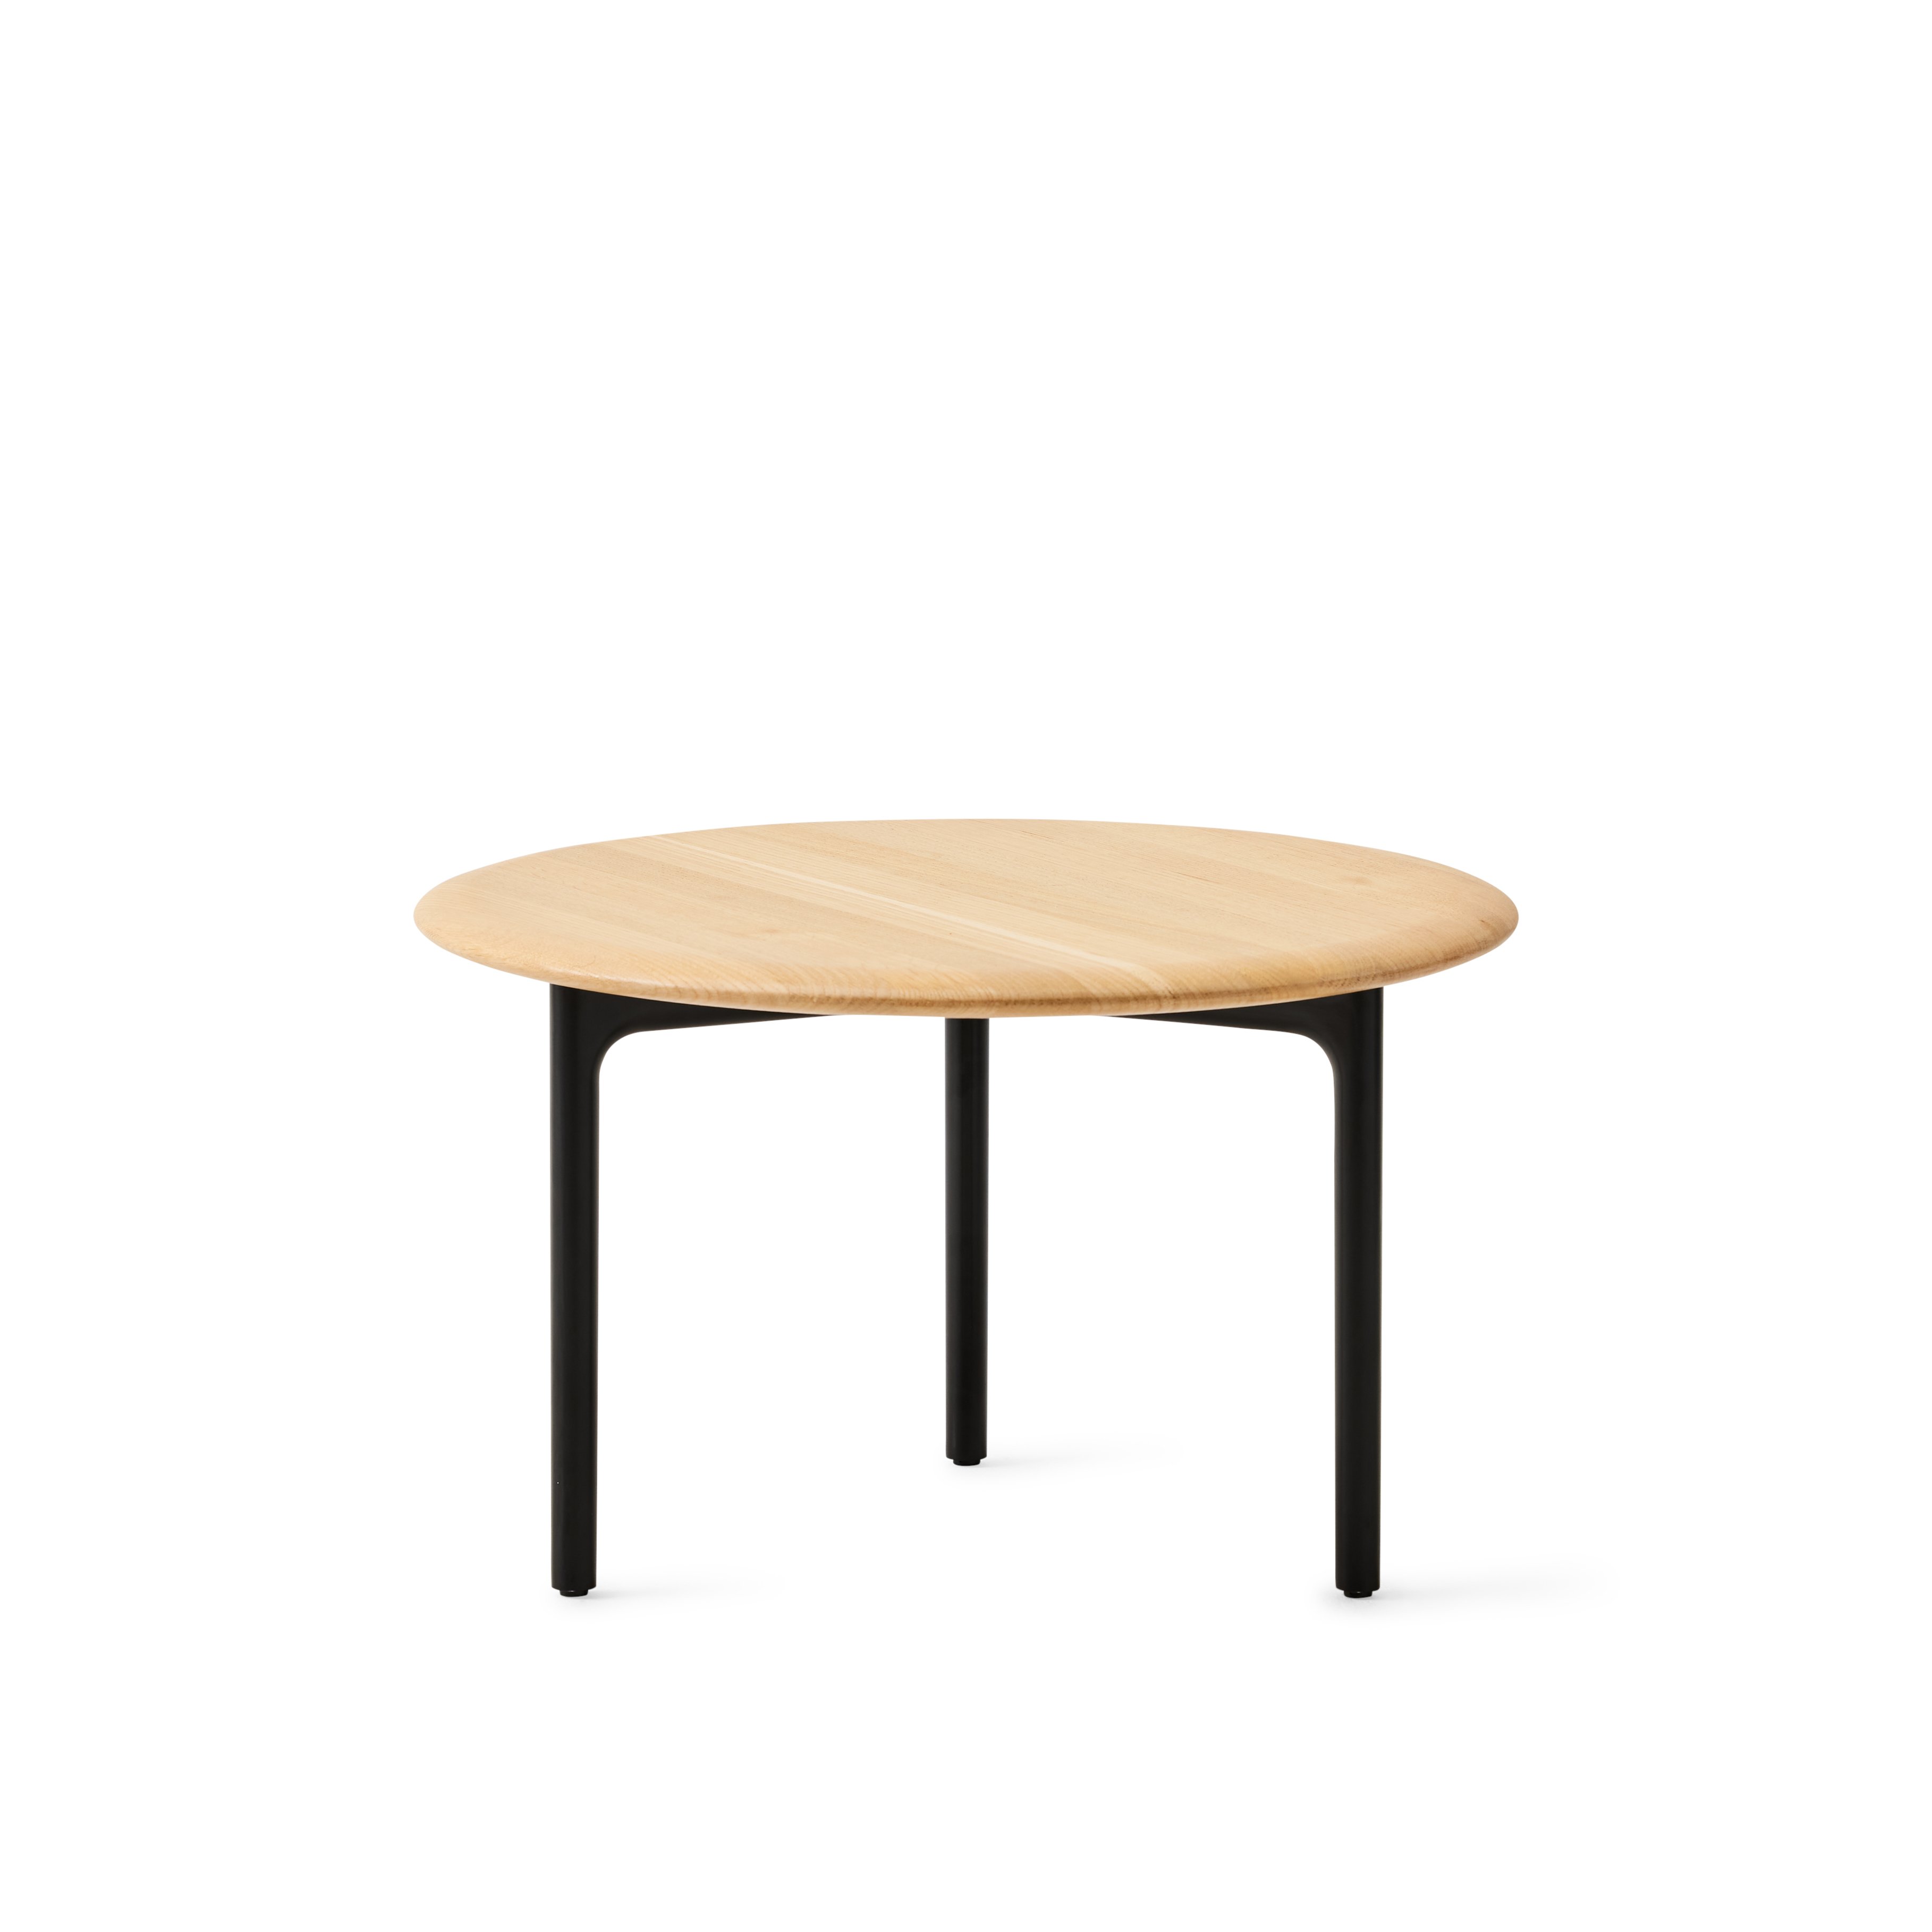 See Haworth's Openest Sprig Side Tables | Haworth